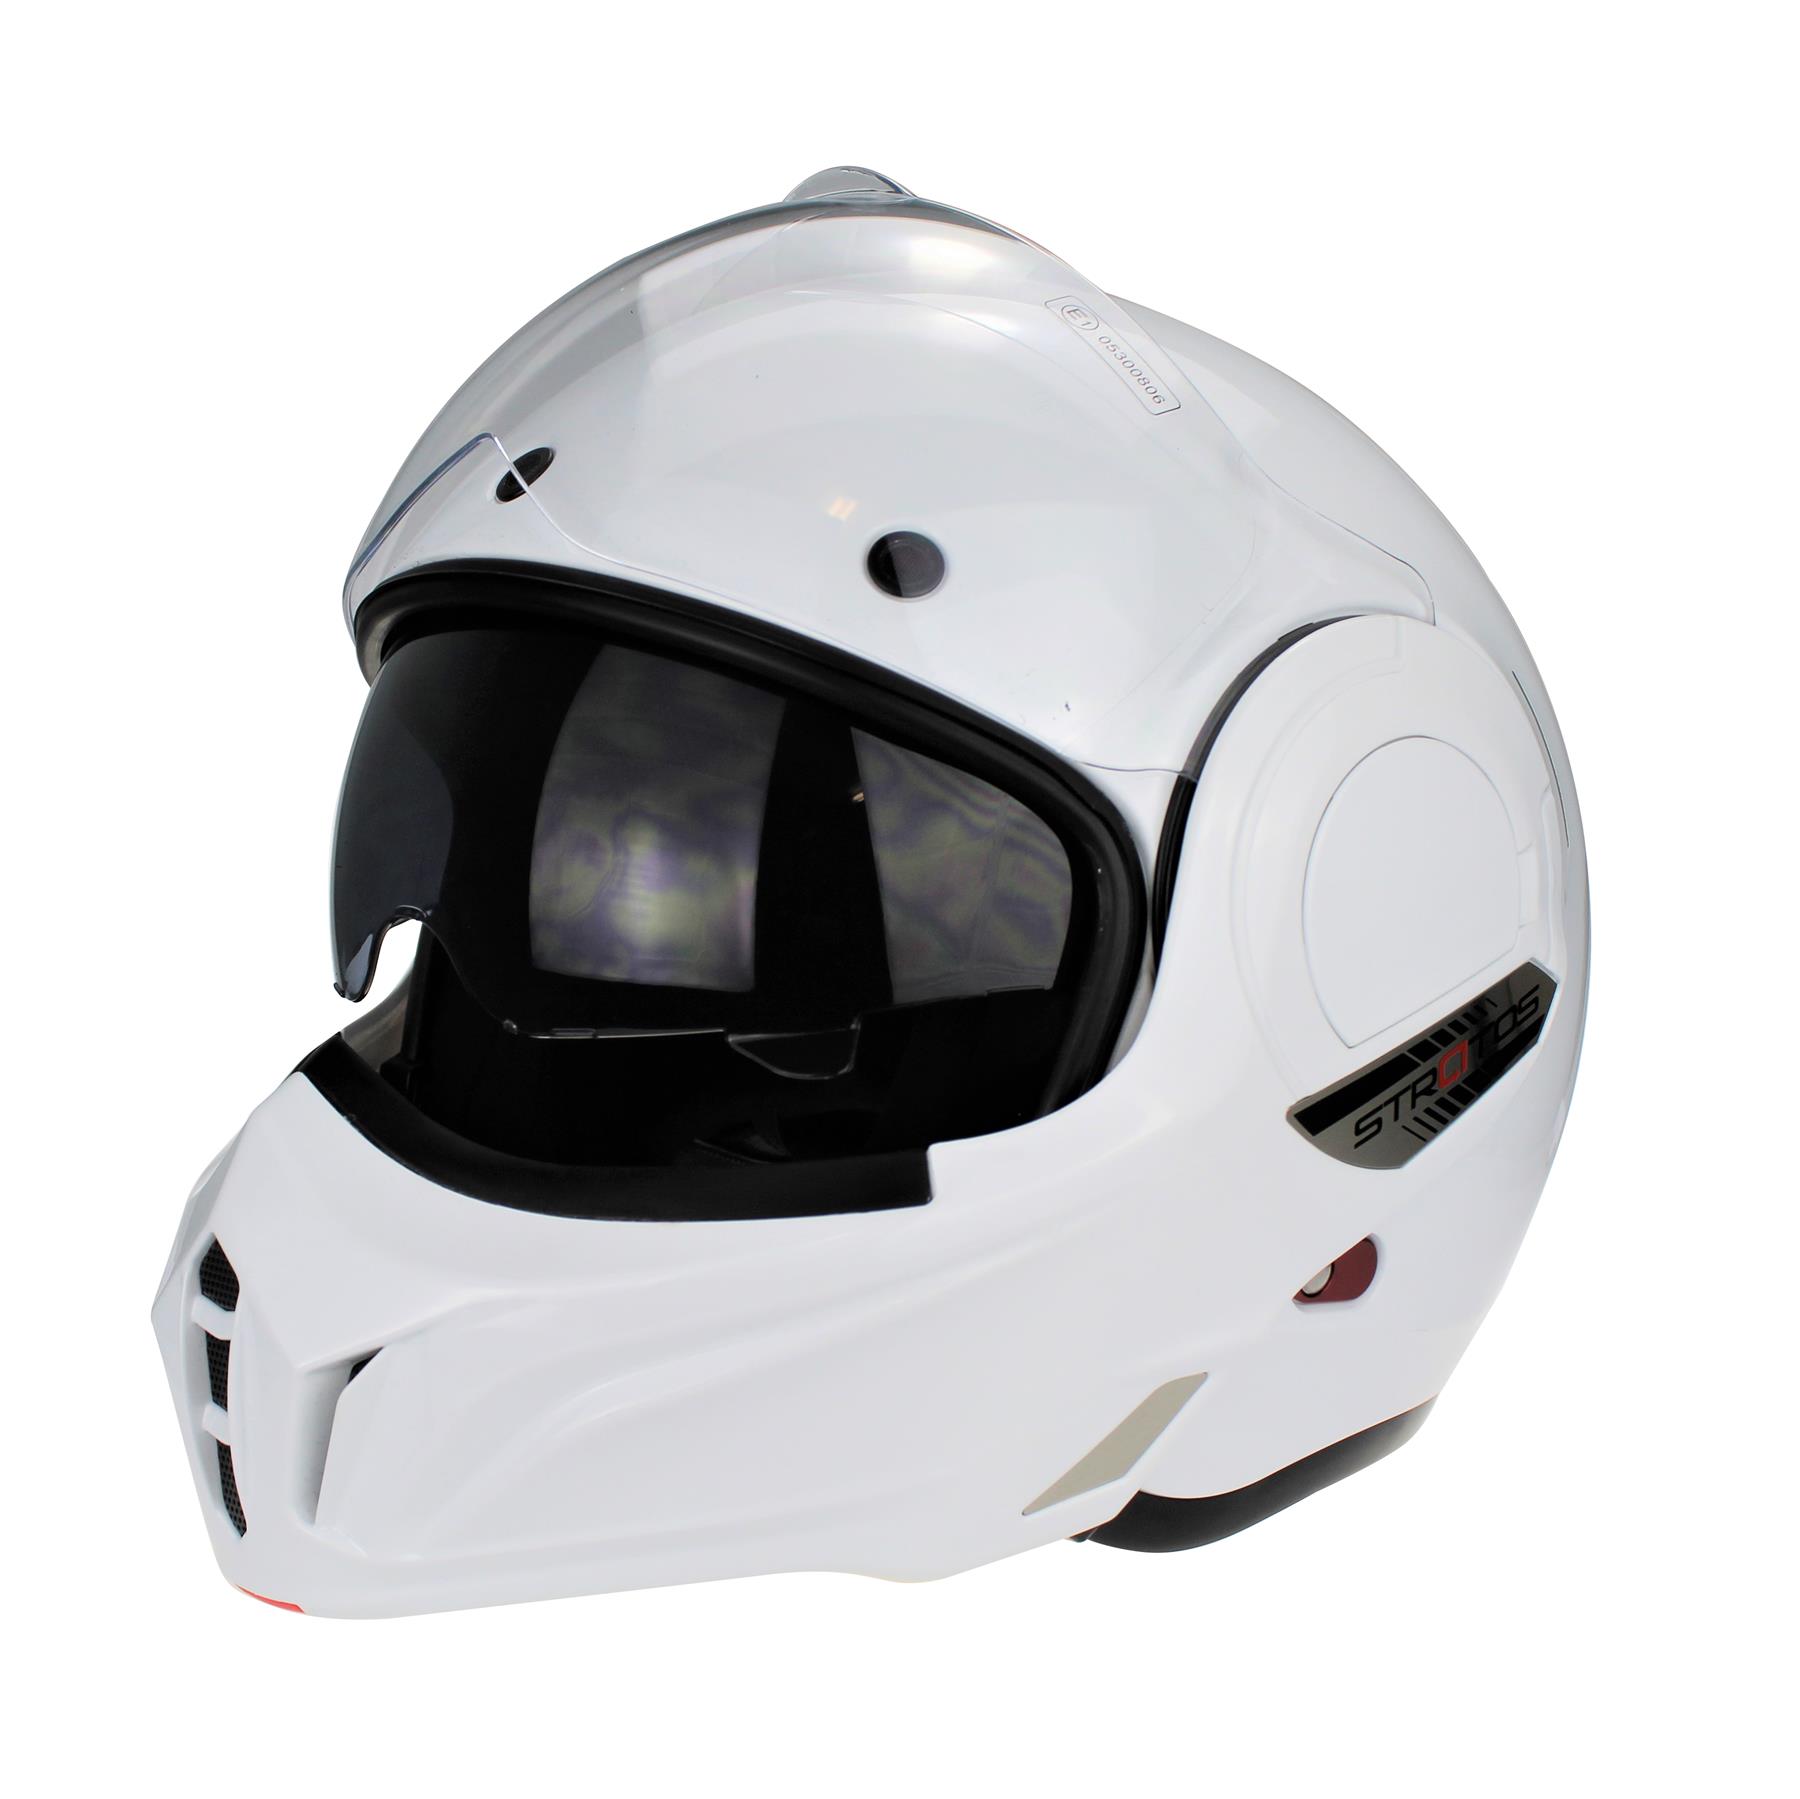 Viper F242 Flip Front Dual Visor Modular Motorcycle Helmet P and J Rated Matt Black